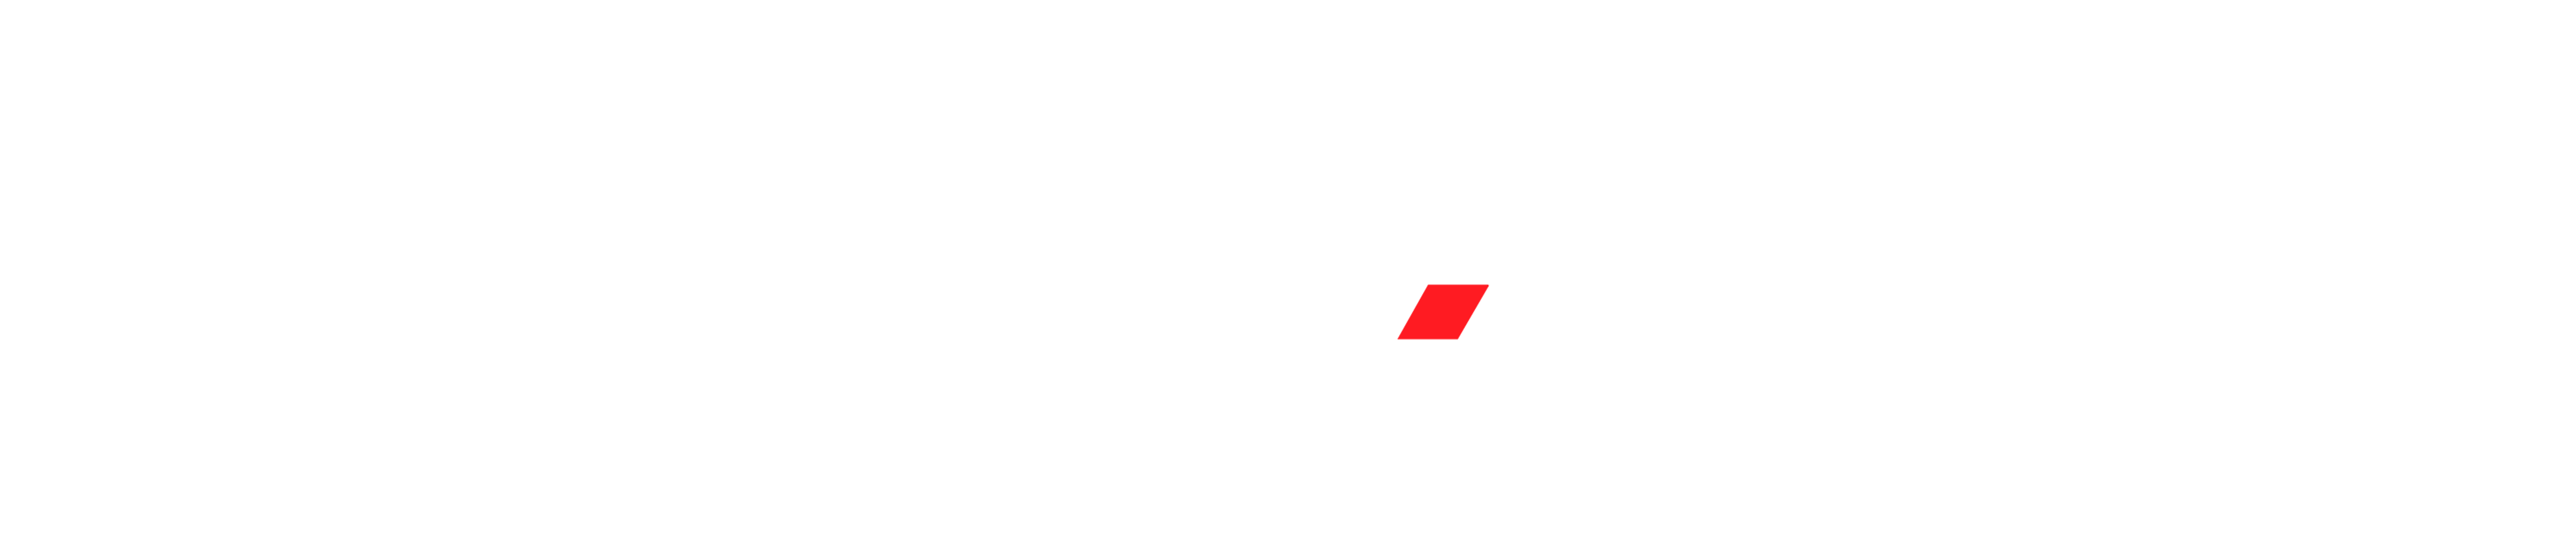 crank-software-ametek-horizontal-colour-cropped